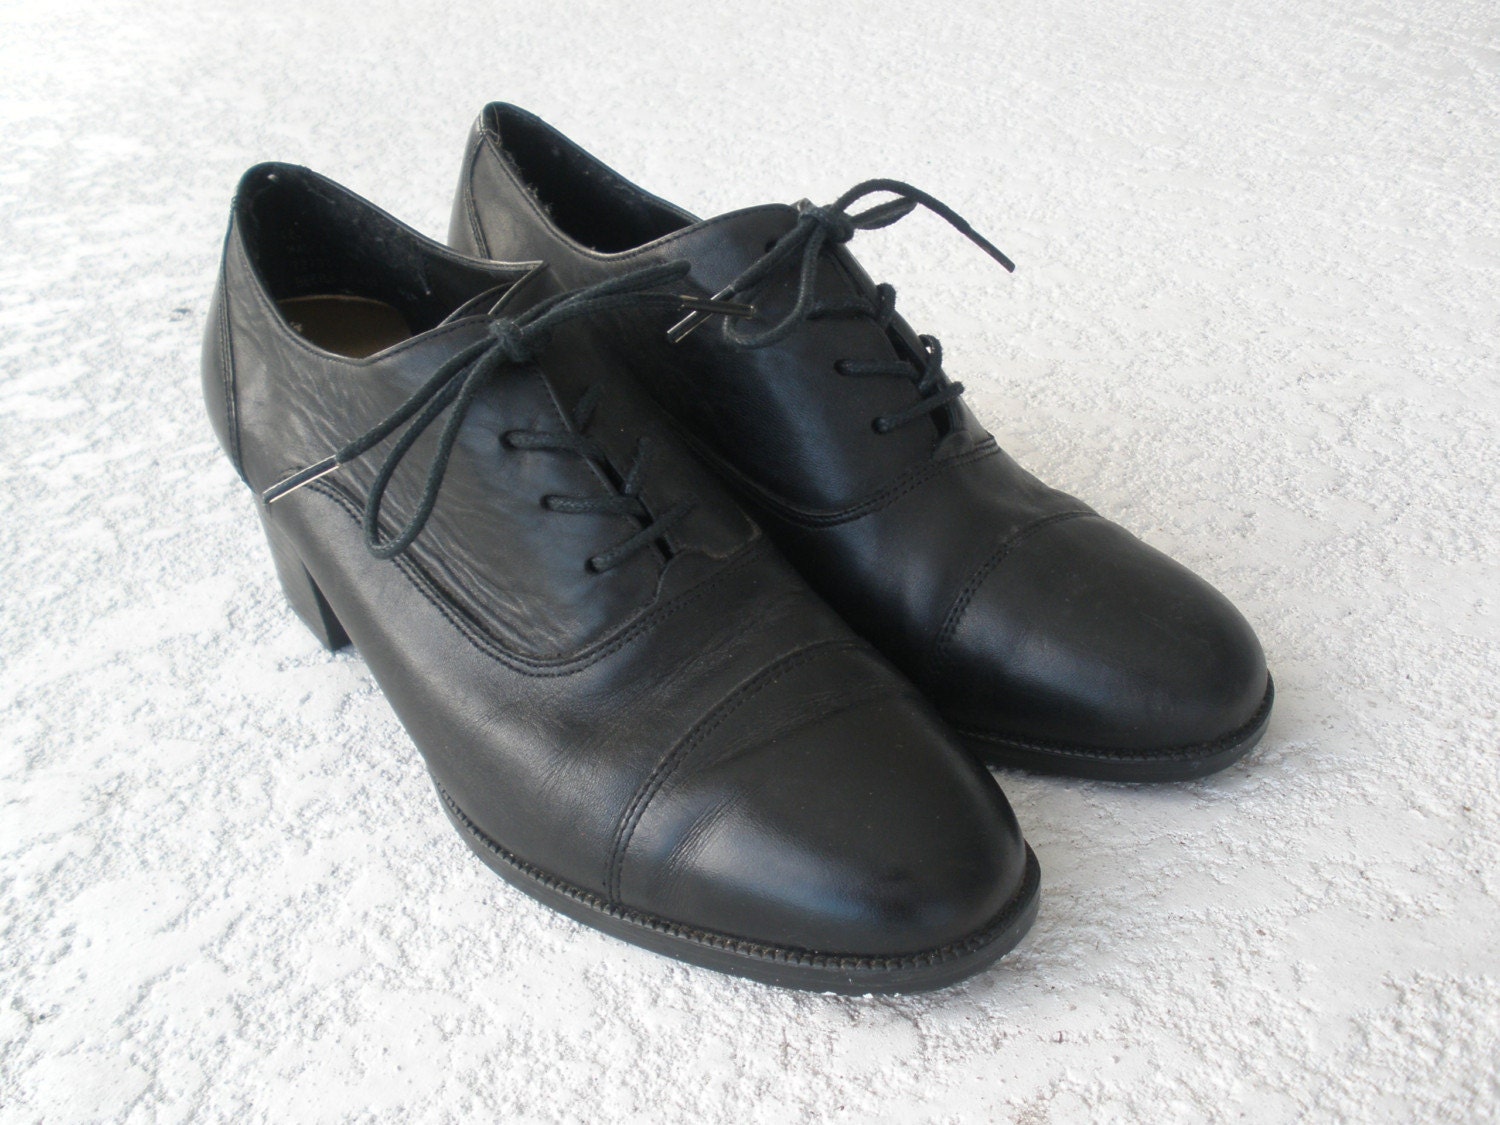 Vintage black leather old lady lace up shoes by vintageagogirl